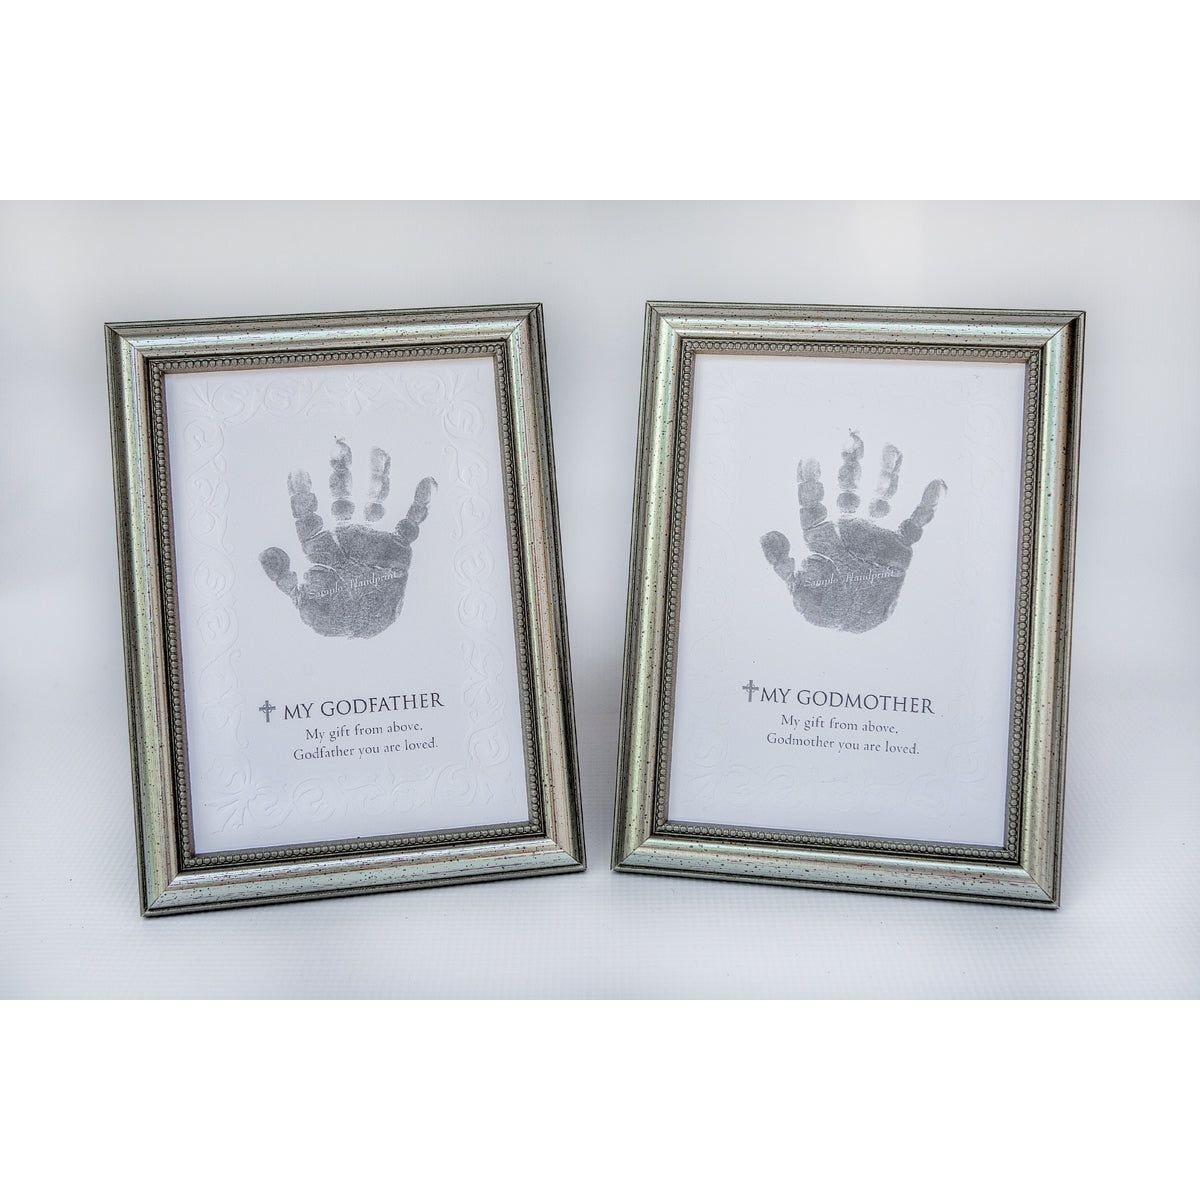 My Godfather and My Godmother keepsake handprint frames.